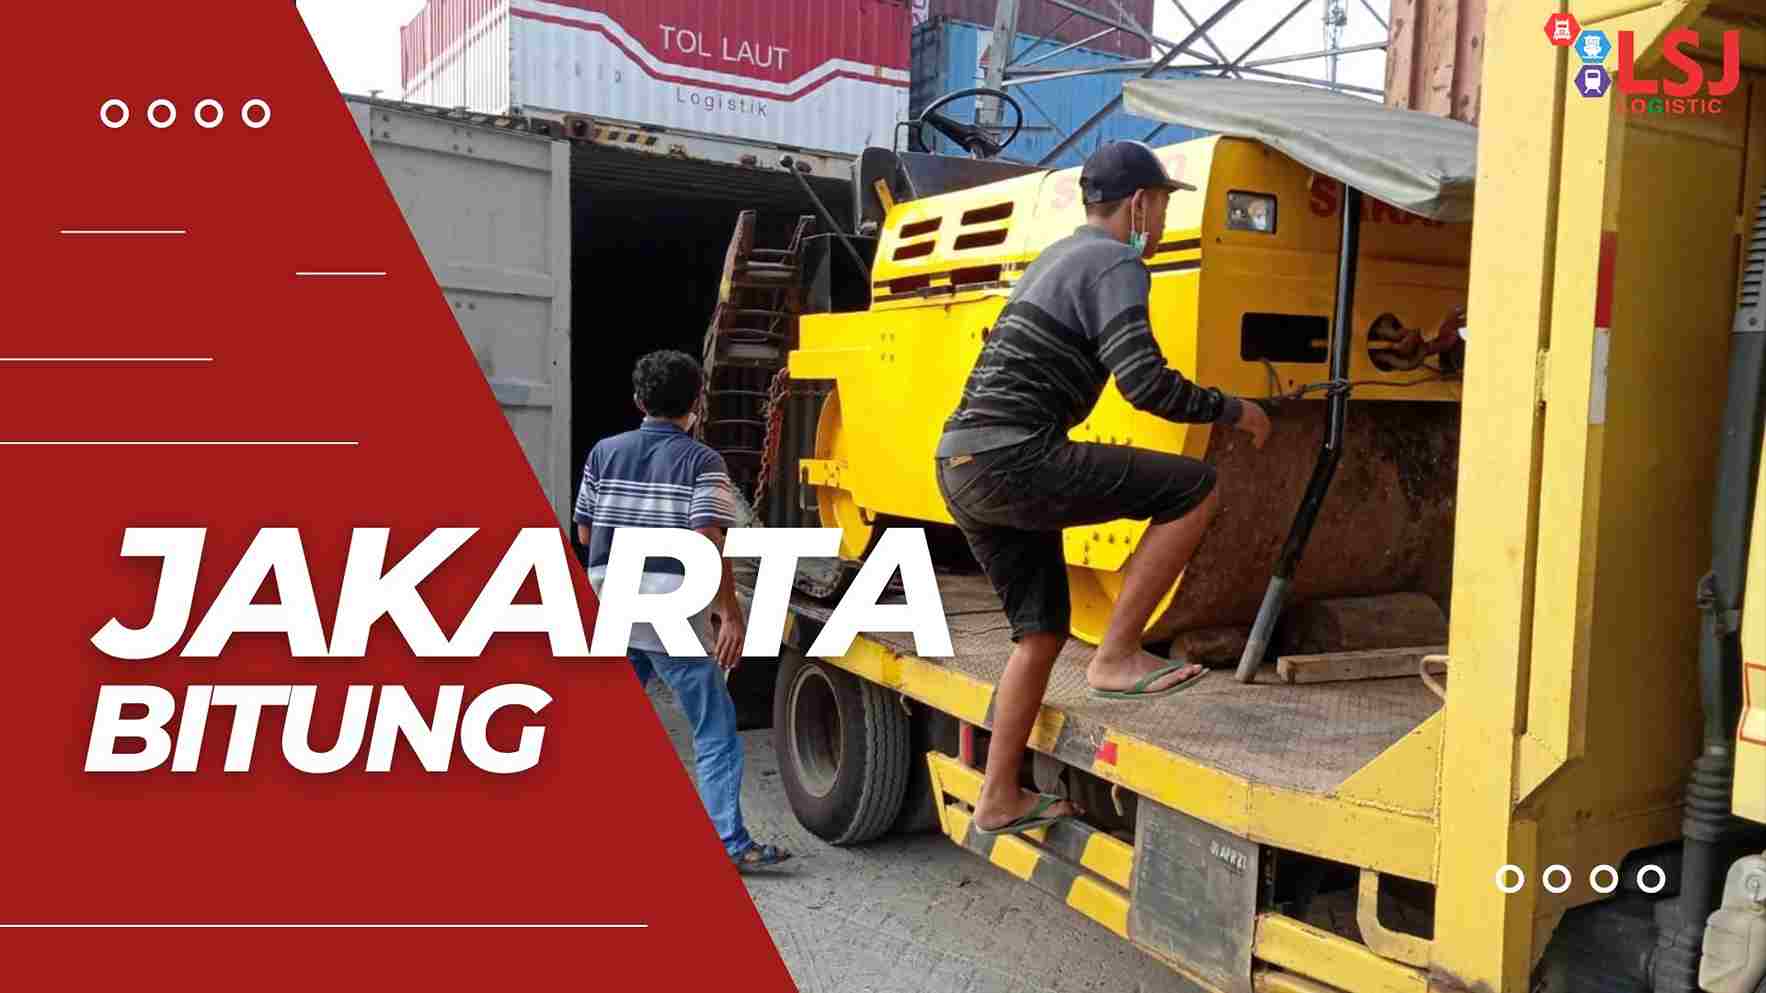 Cargo Container Jakarta Bitung